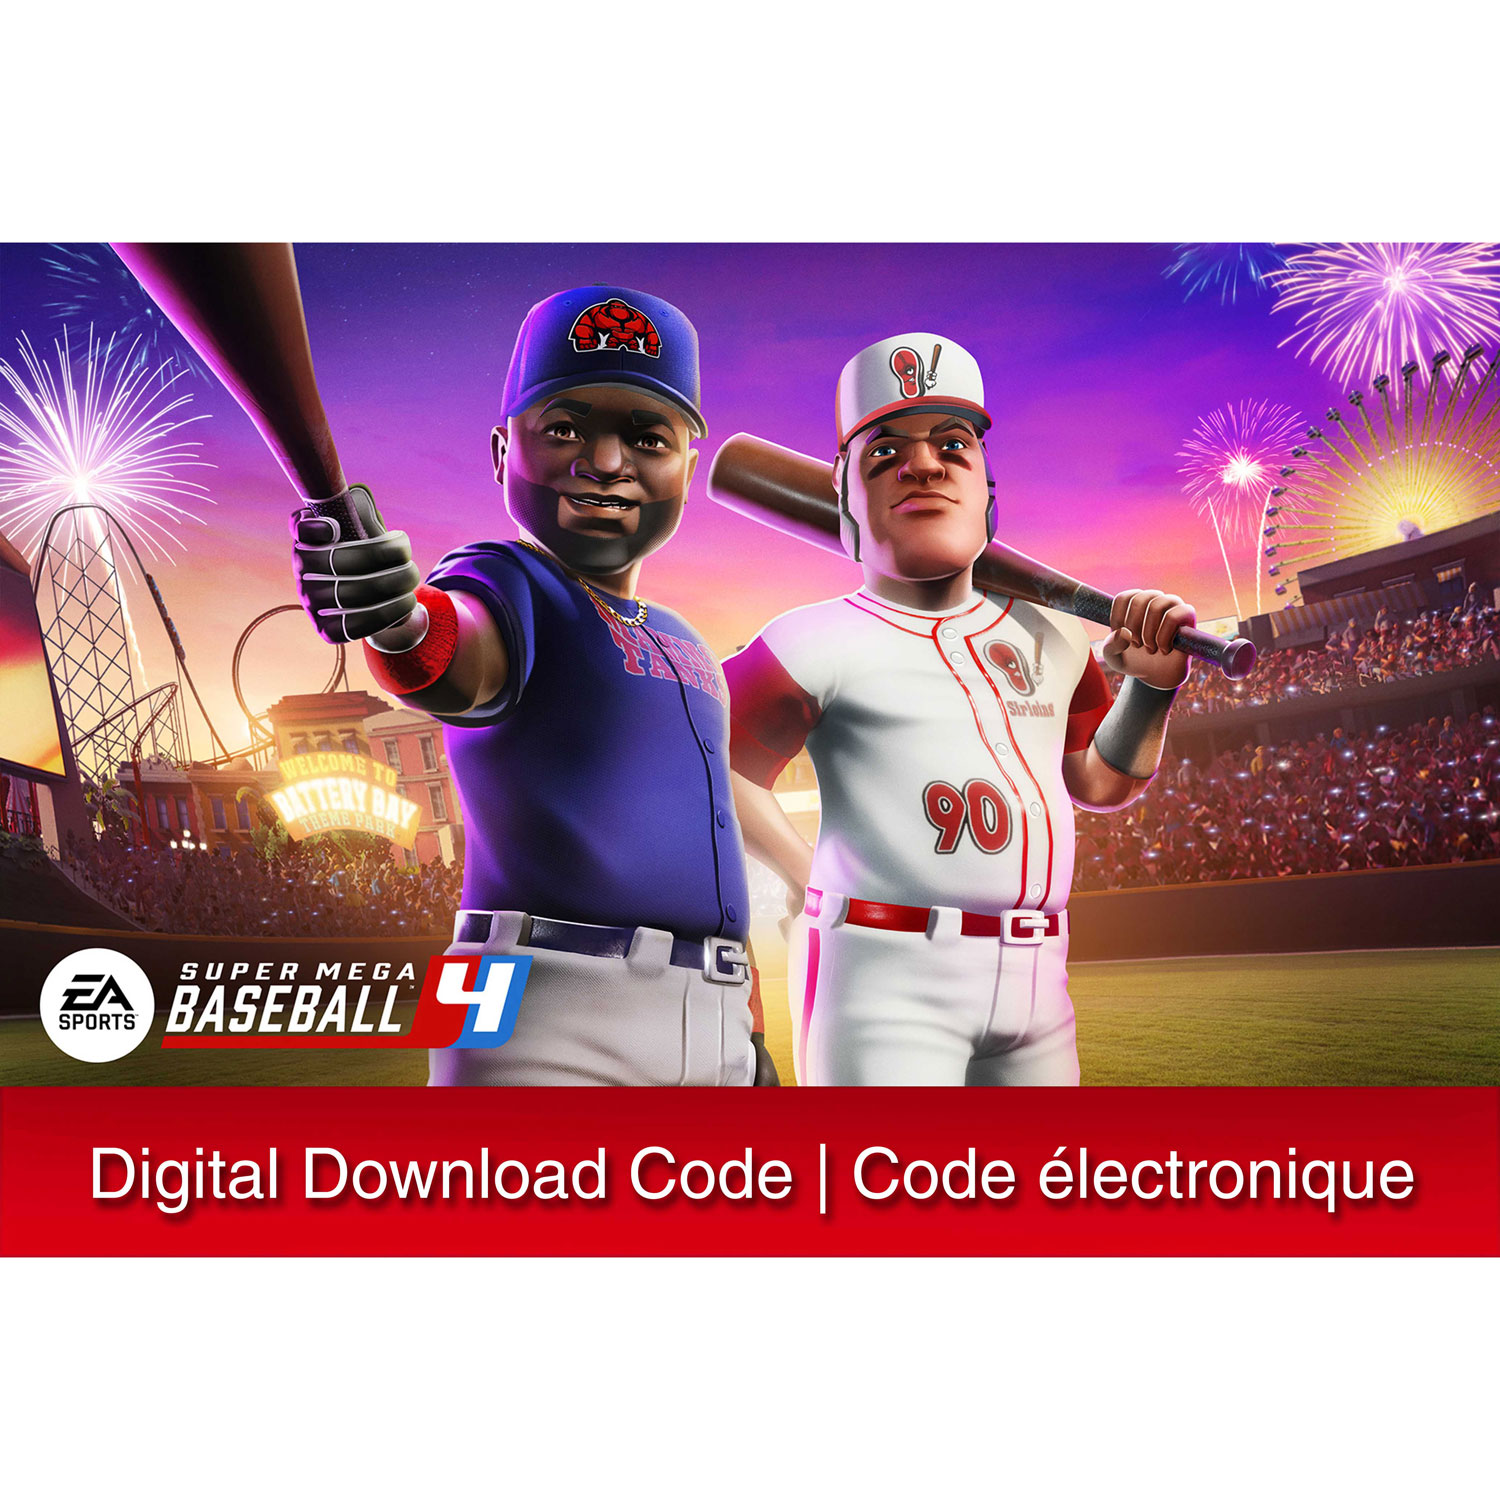 Super Mega Baseball 4 (Switch) - Digital Download